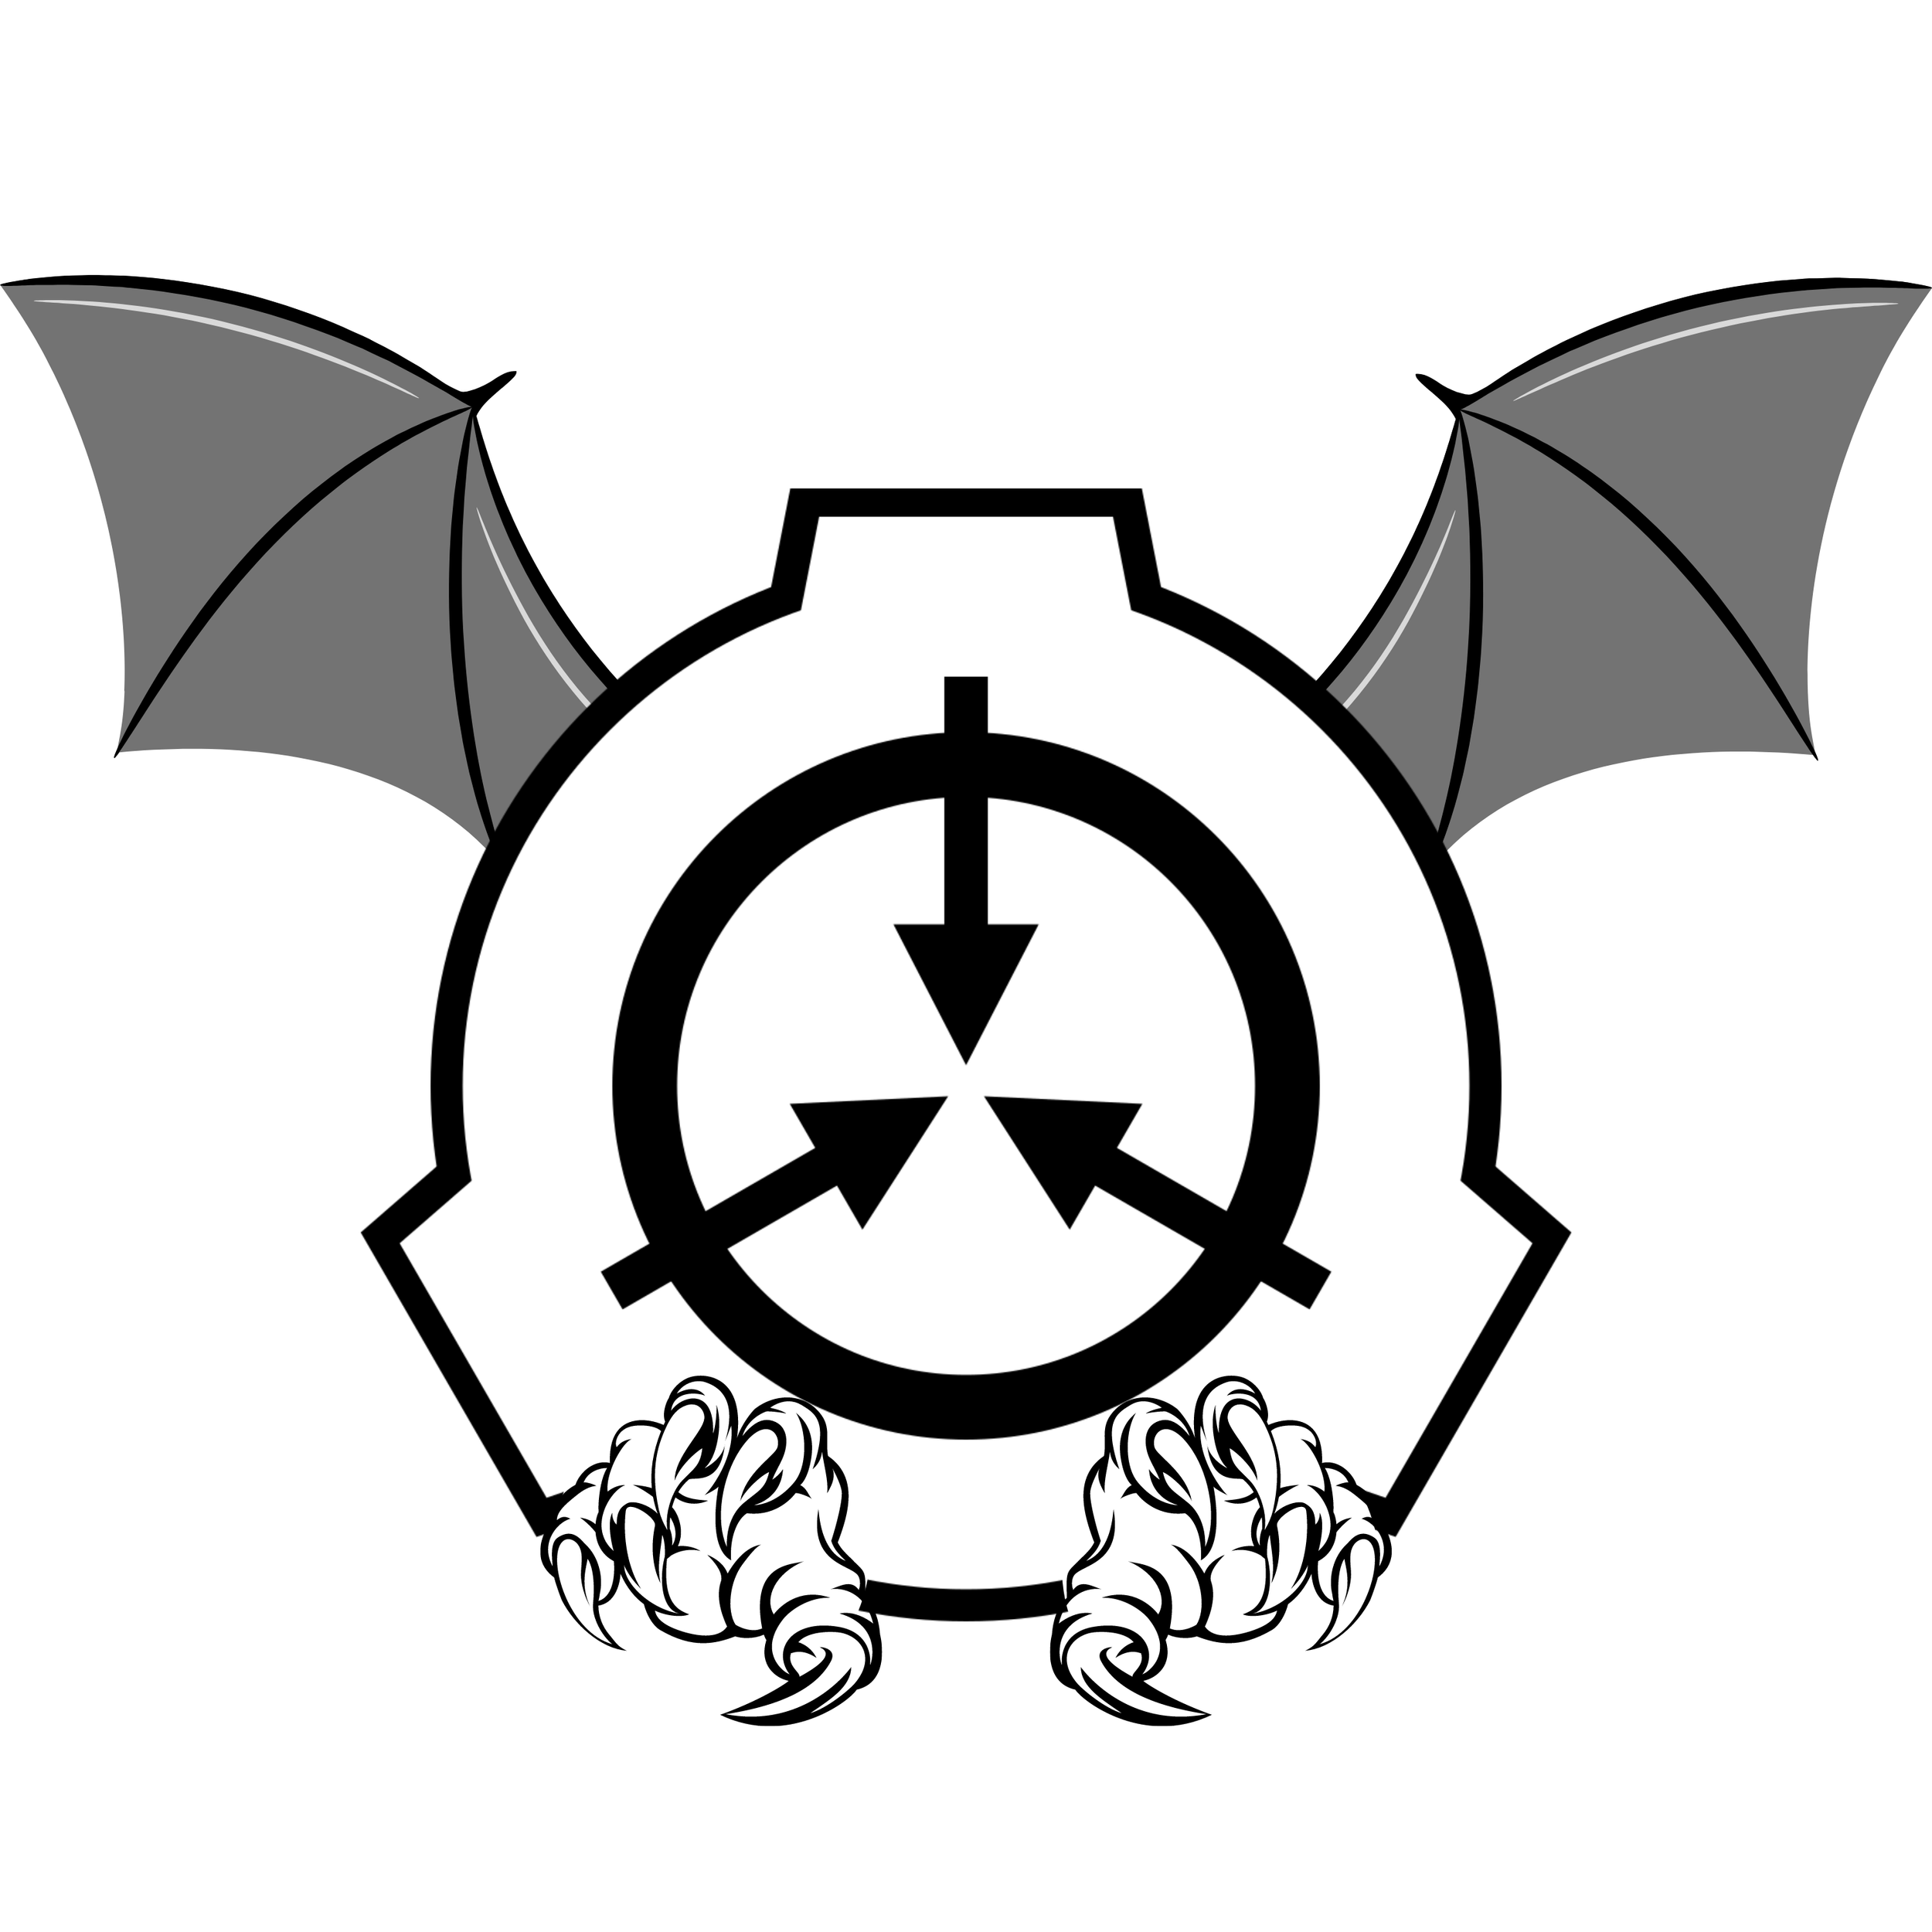 Original SCP Foundation Logo Tattoo Ideas: Images Included